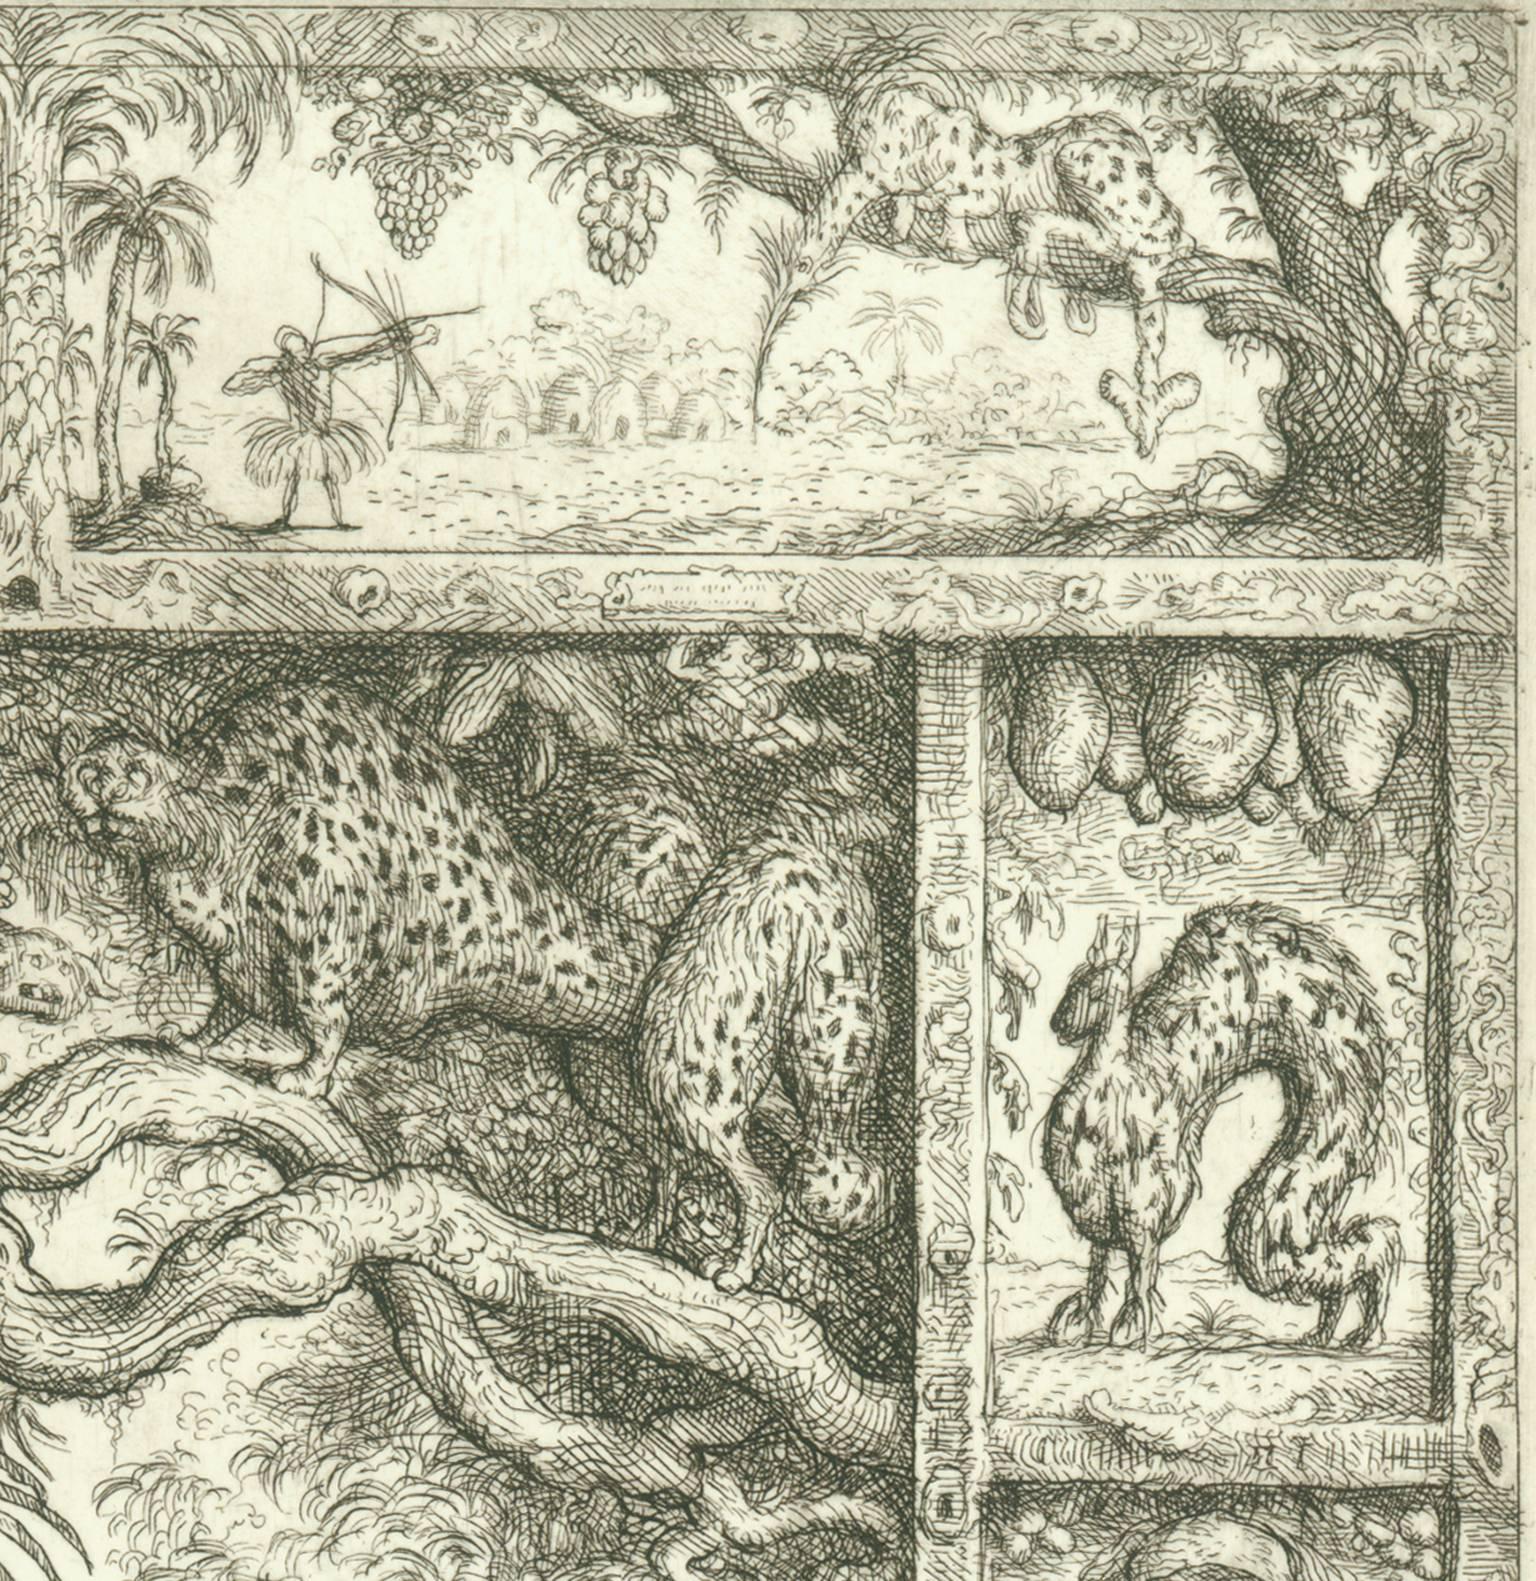 Pzrdrnv z pralesa (Postcard from the Rainforest) - Print by Peter Klúcik